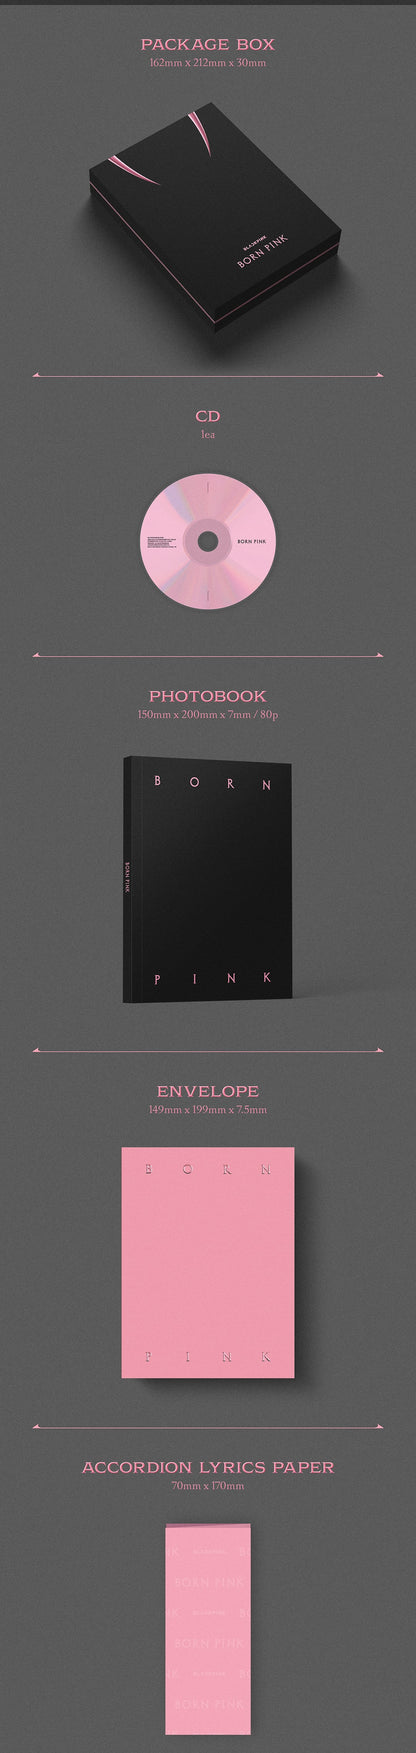 BLACKPINK - 2nd Full Album 'BORN PINK' (Box Set Version)